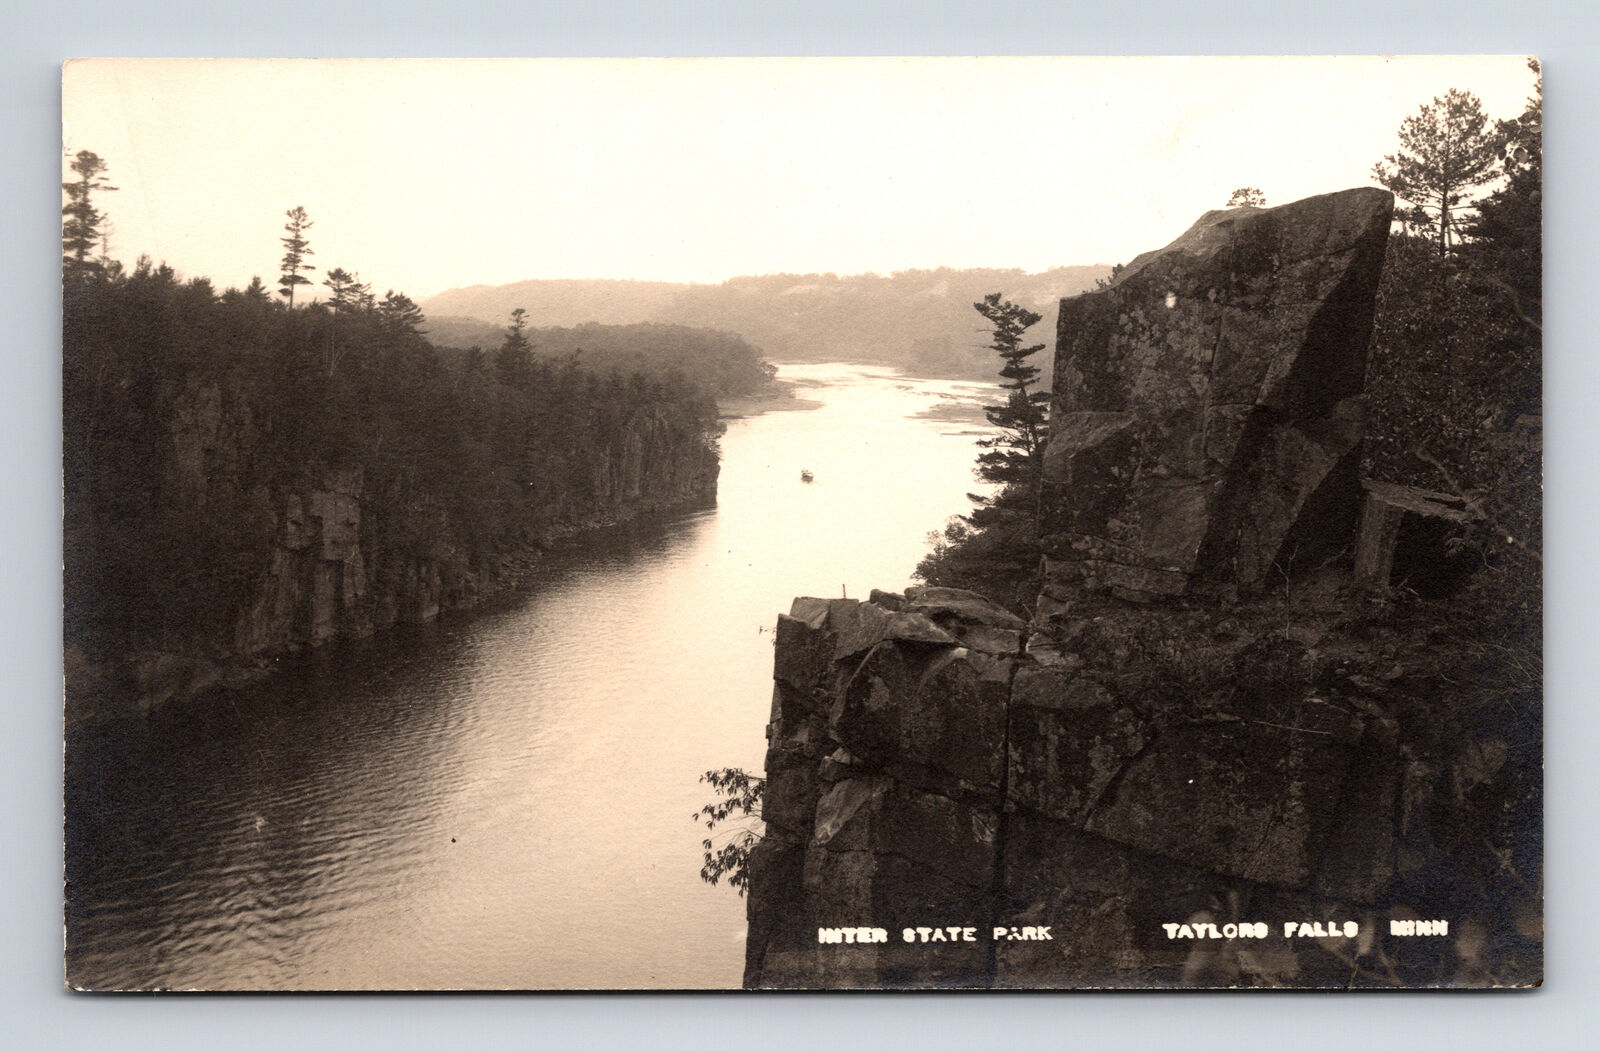 RPPC Scenic View Inter State Park Taylors Falls Minnesota MN Real Photo Postcard